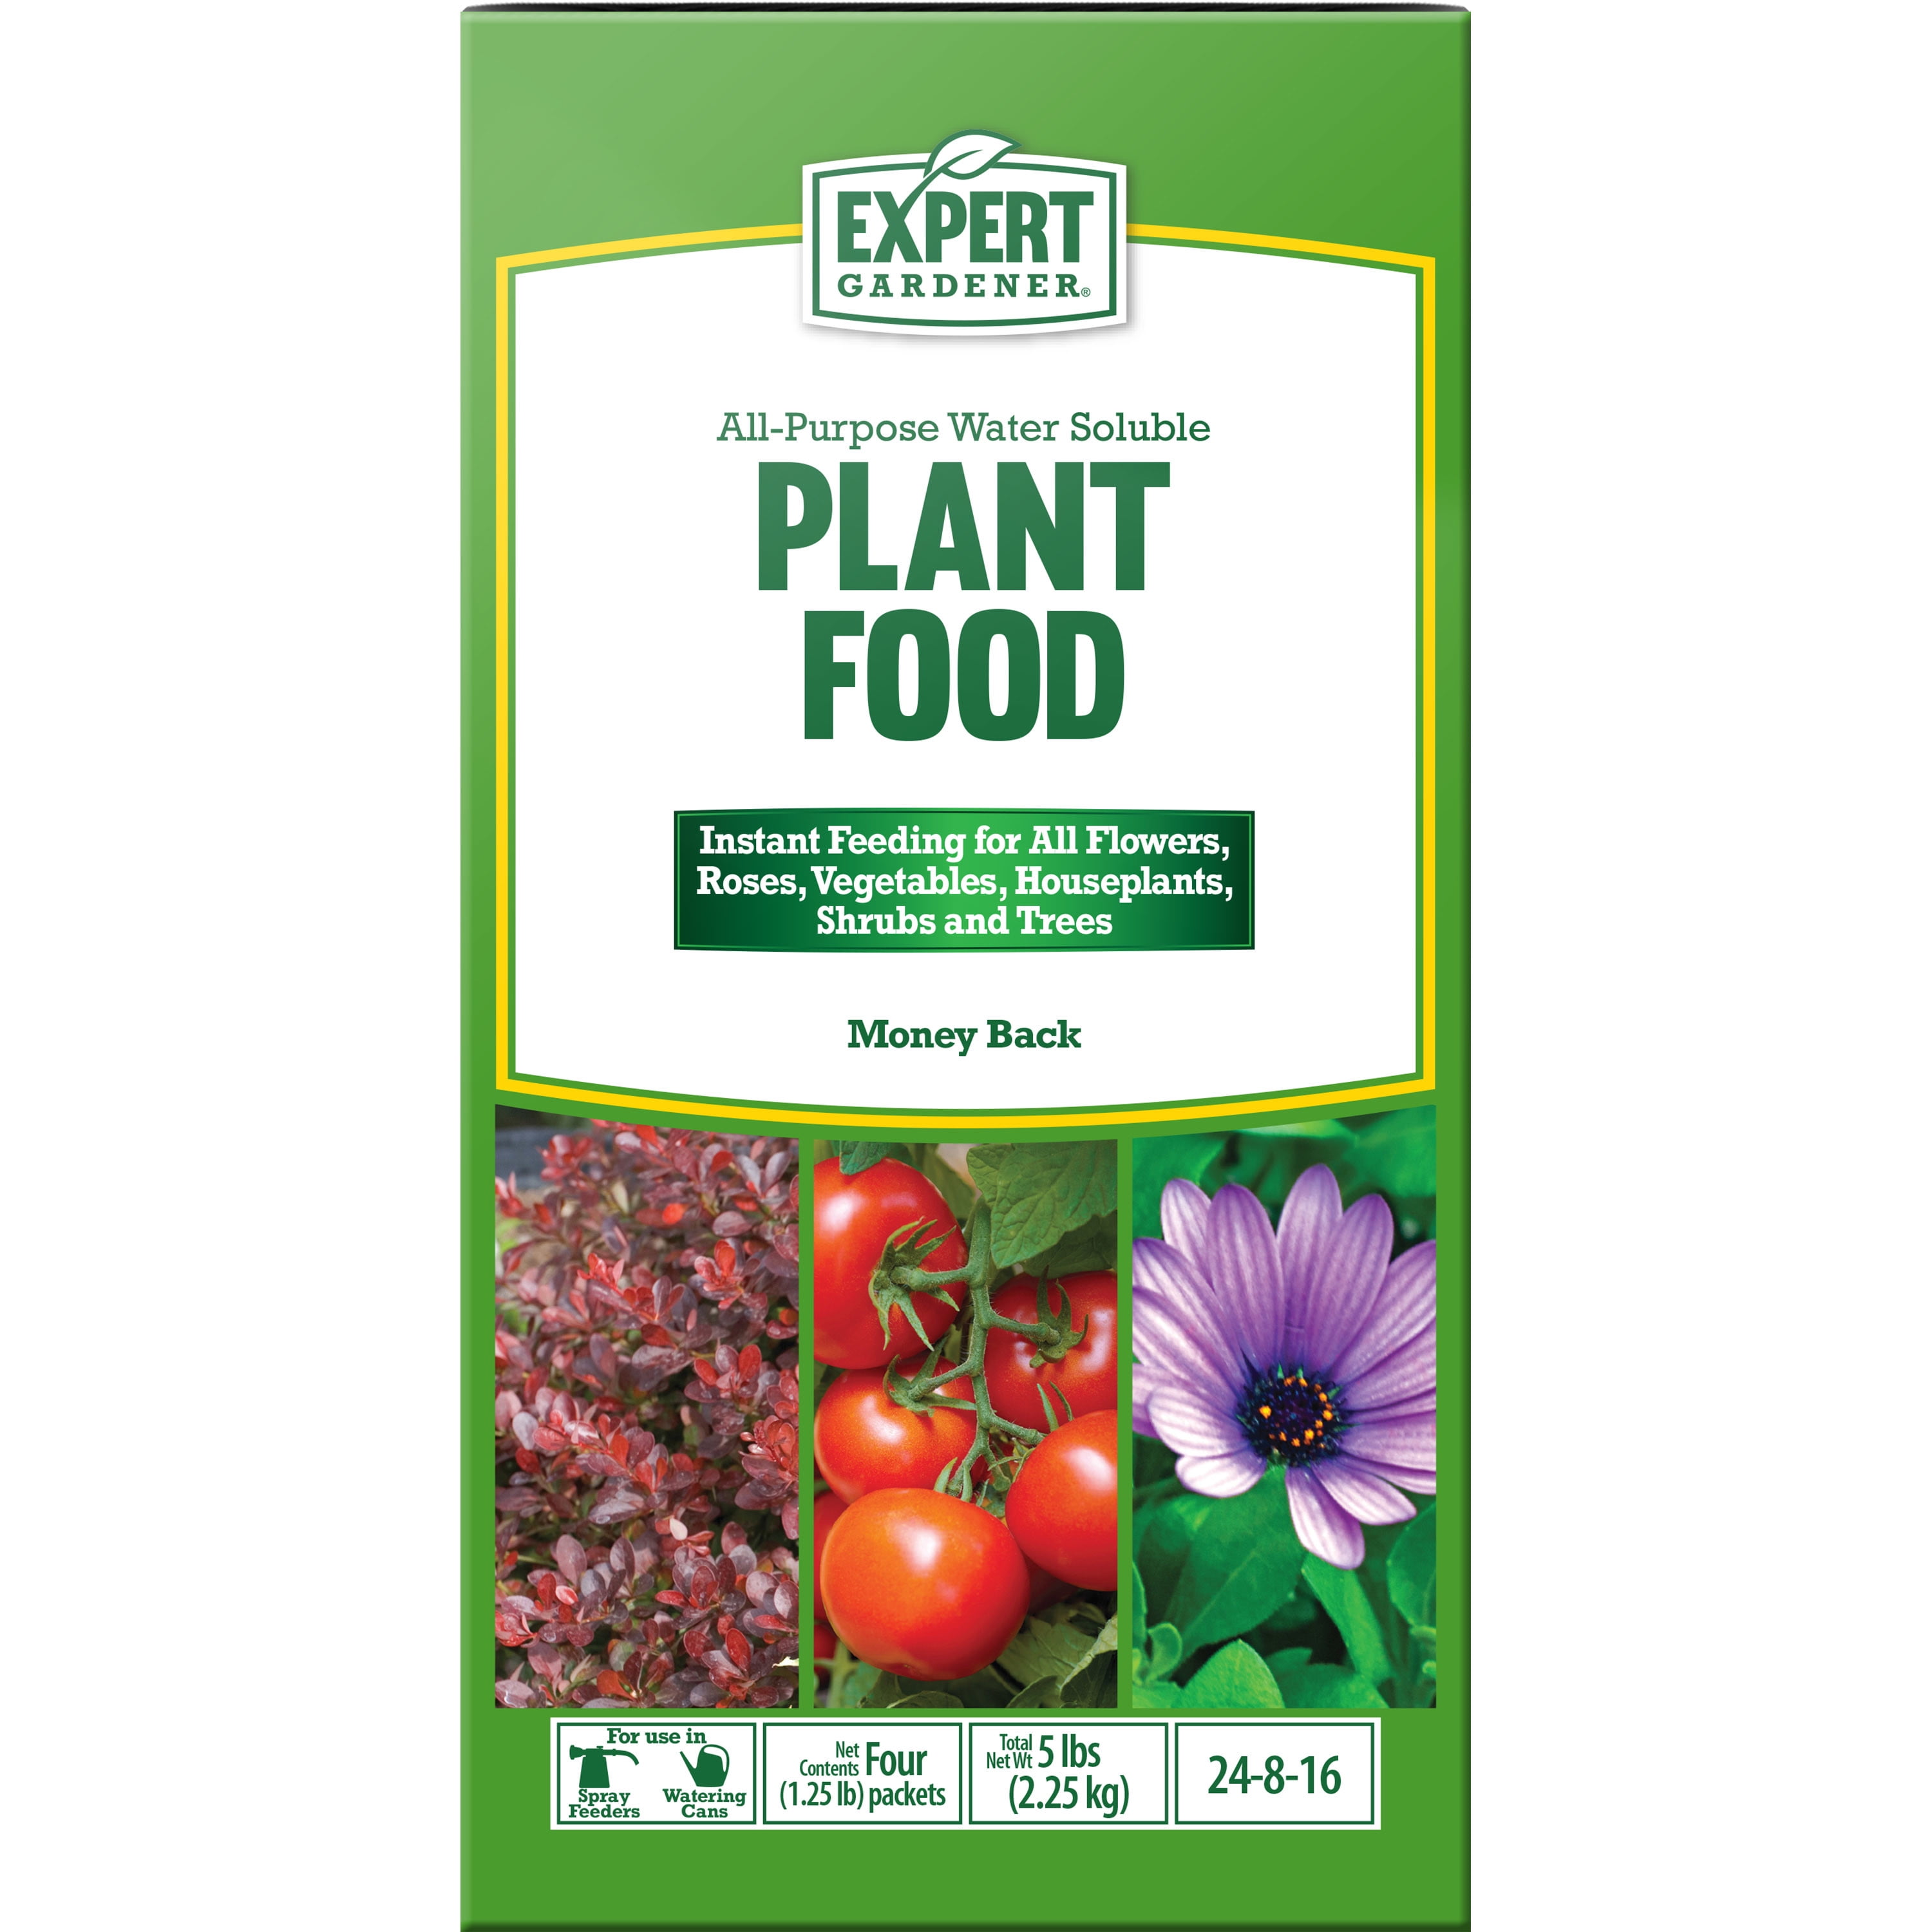 Expert Gardener All-Purpose Water Soluble Plant Food, 24-8-16 Fertilizer, 5 lb.